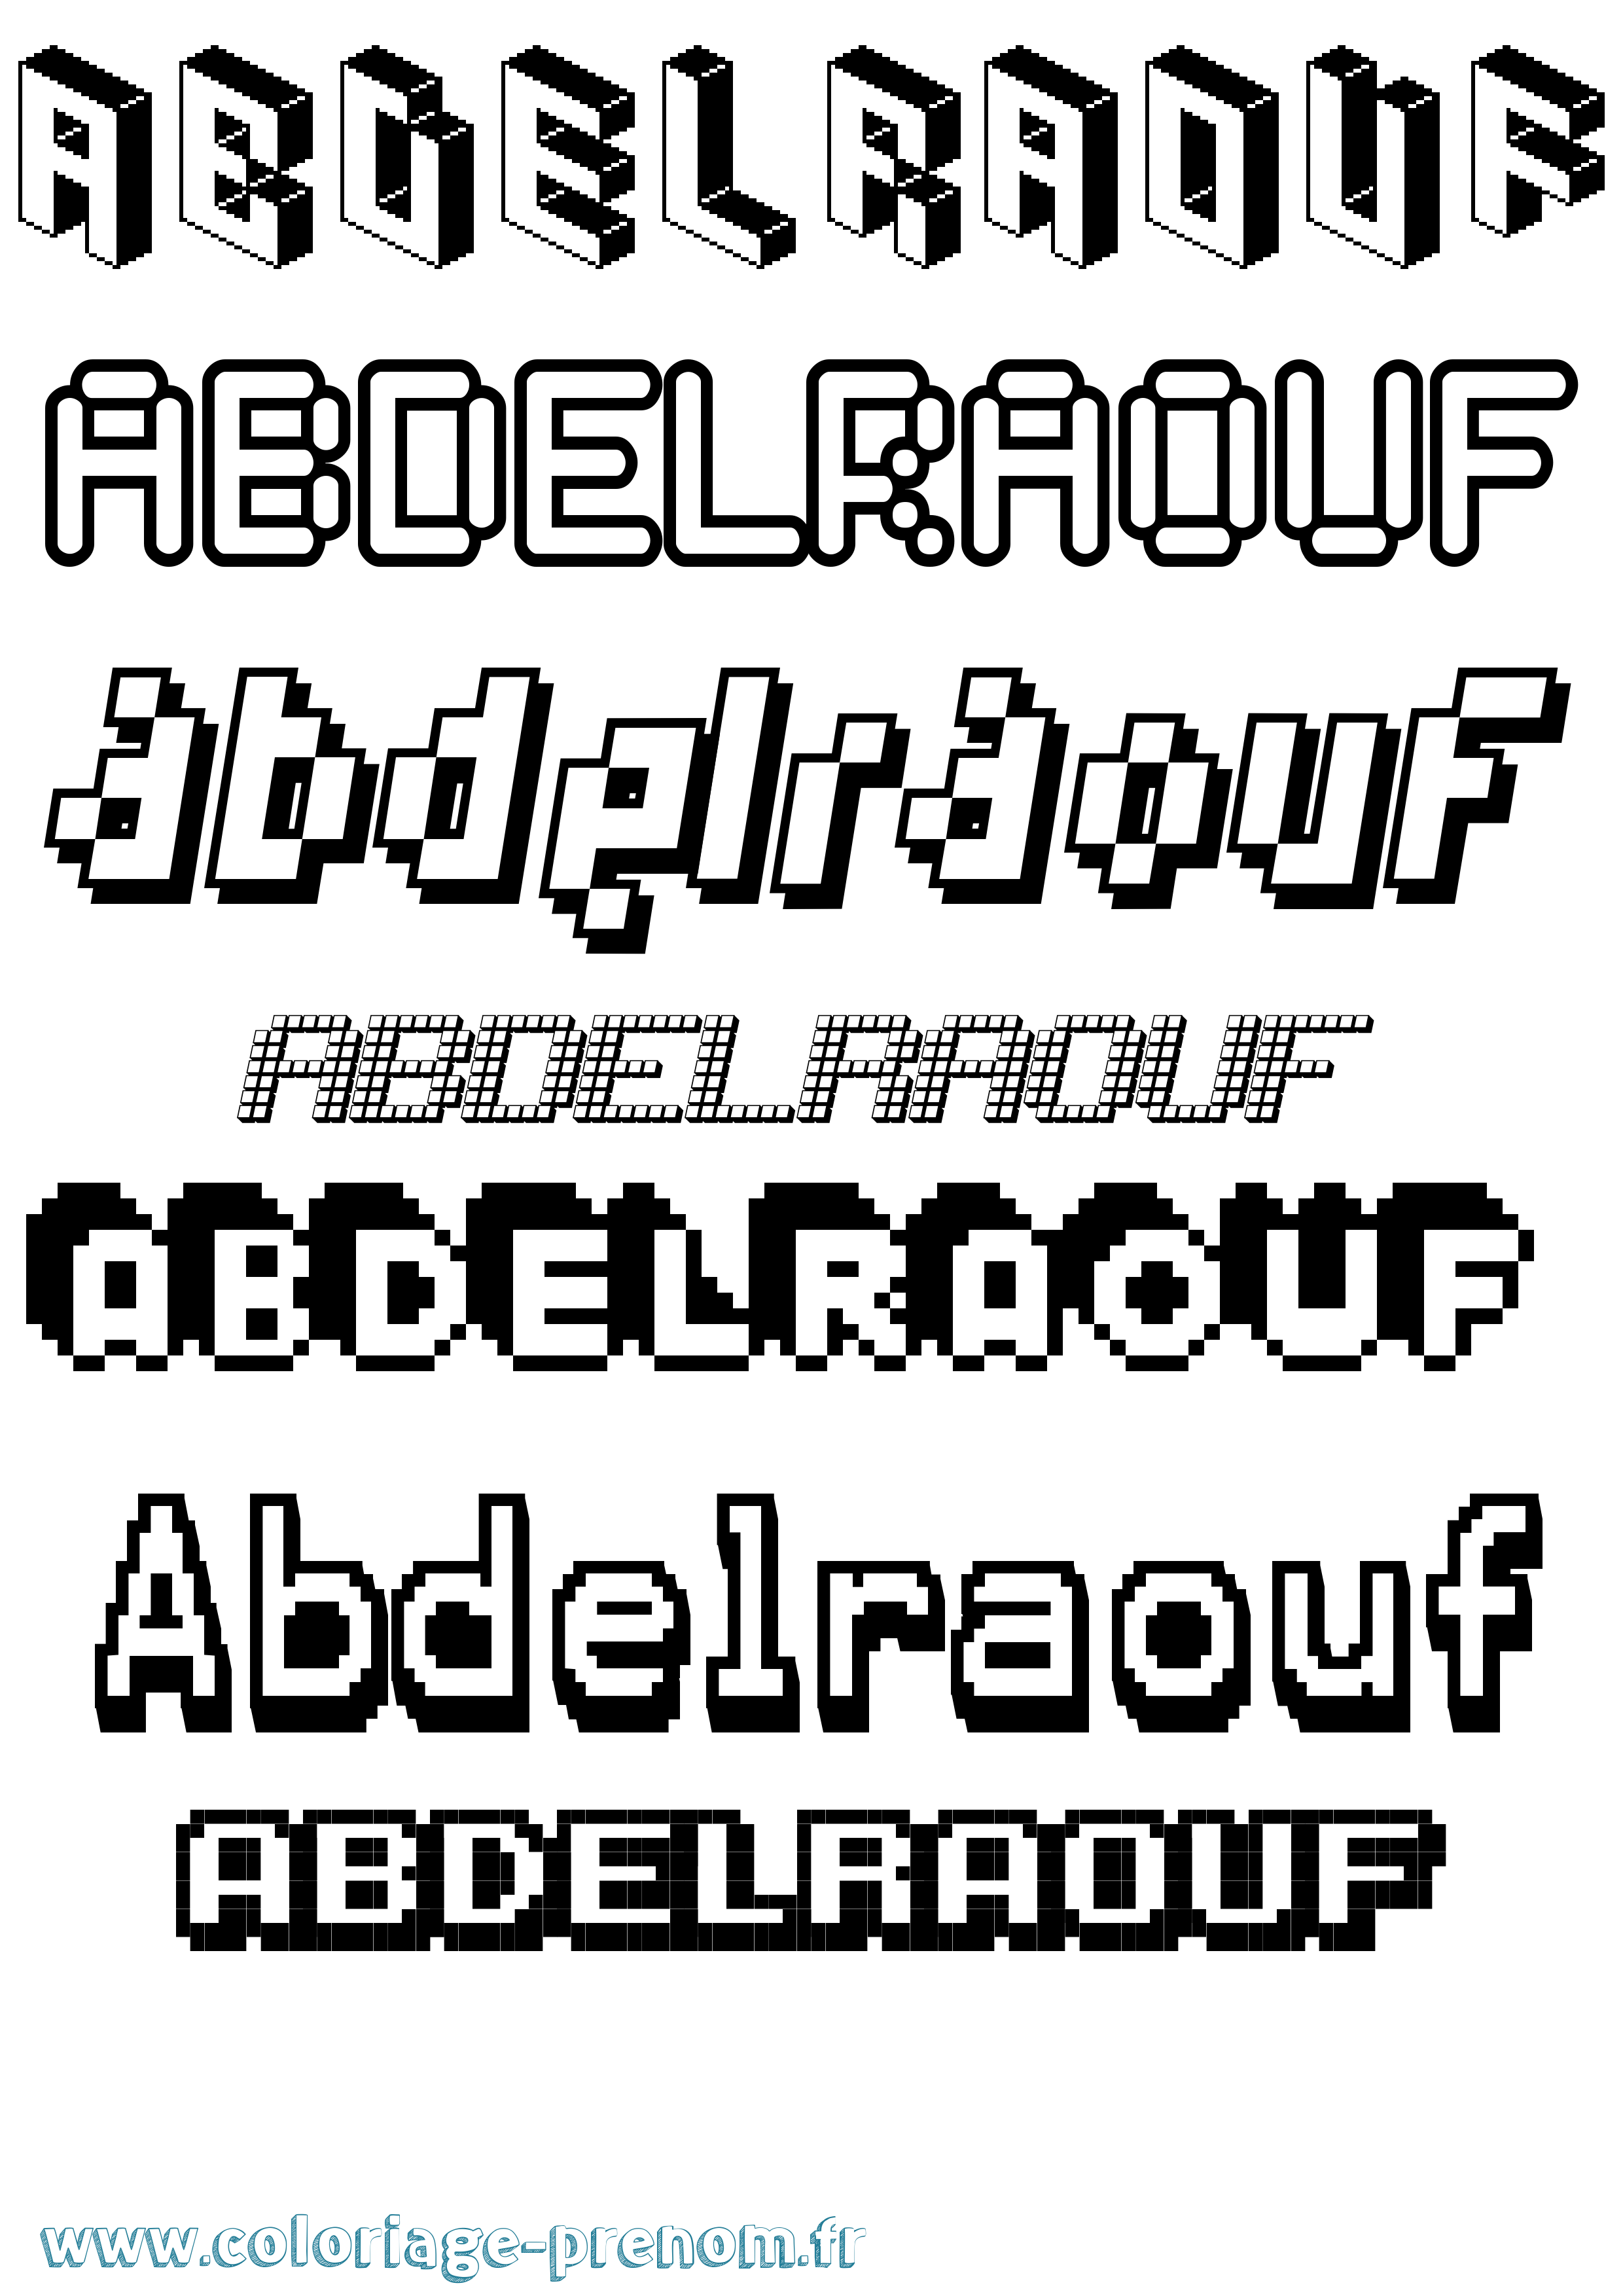 Coloriage prénom Abdelraouf Pixel